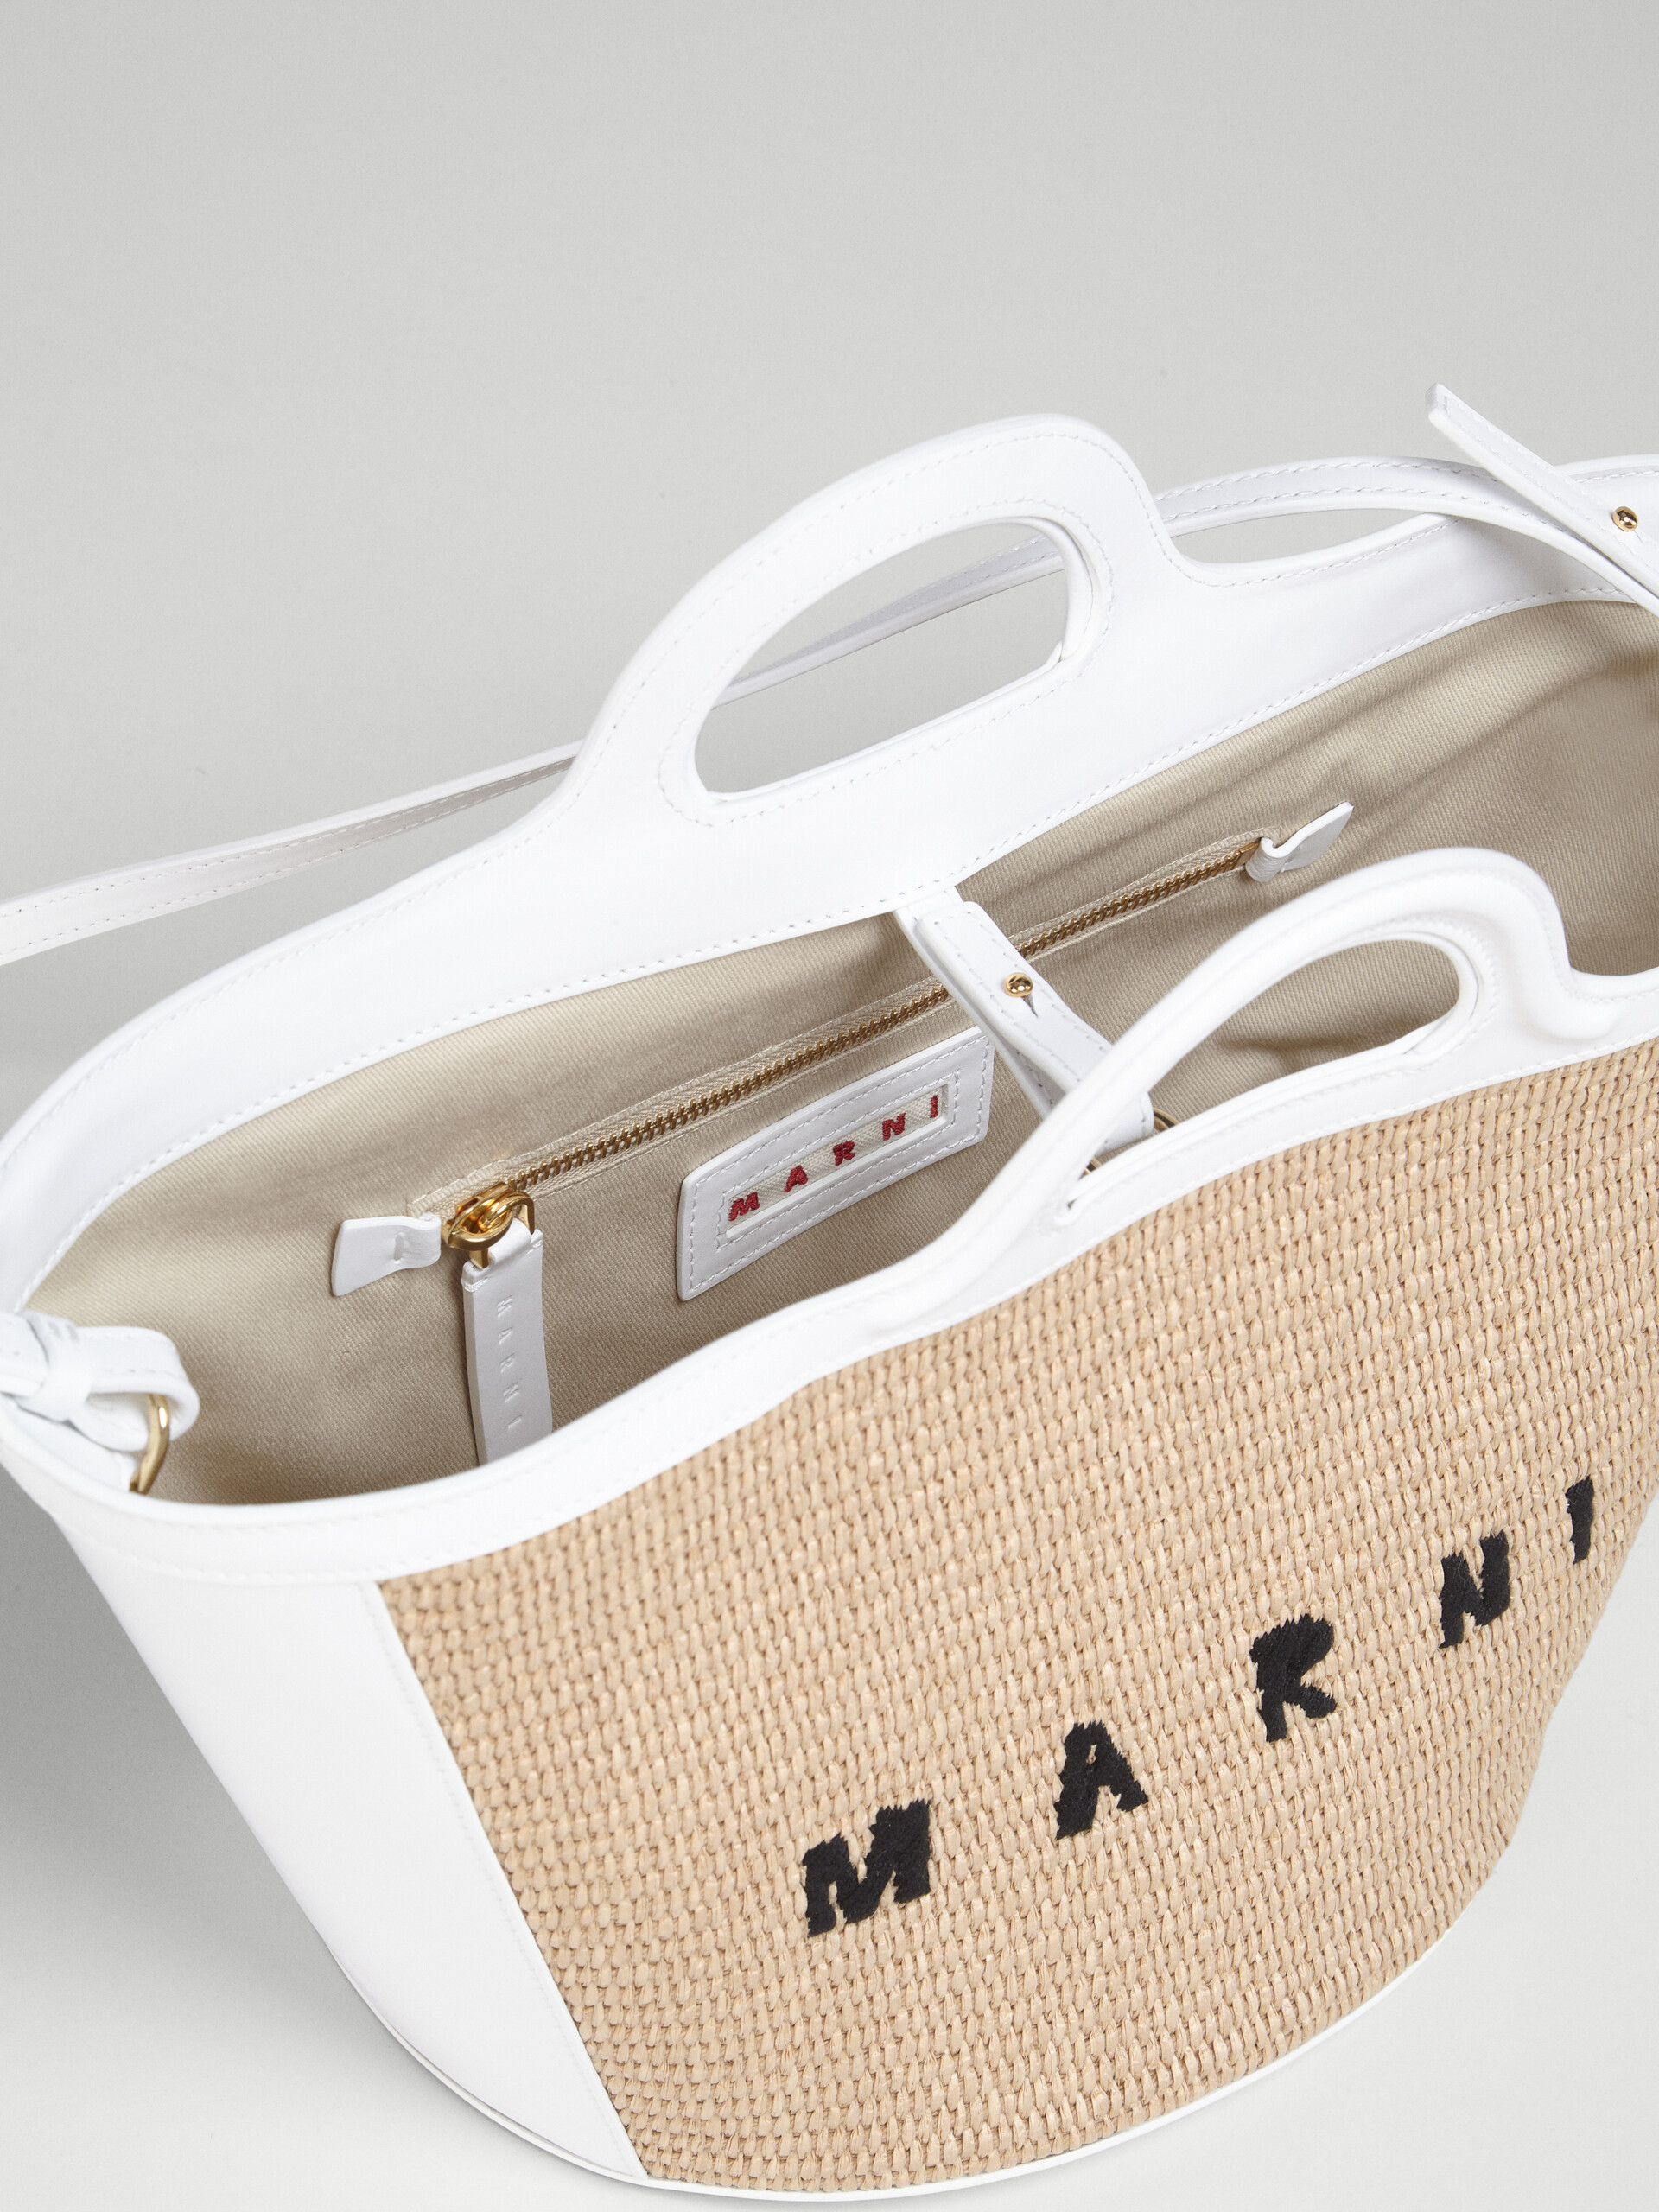 Tropicalia Small Bag in white leather and raffia - Handbags - Image 5